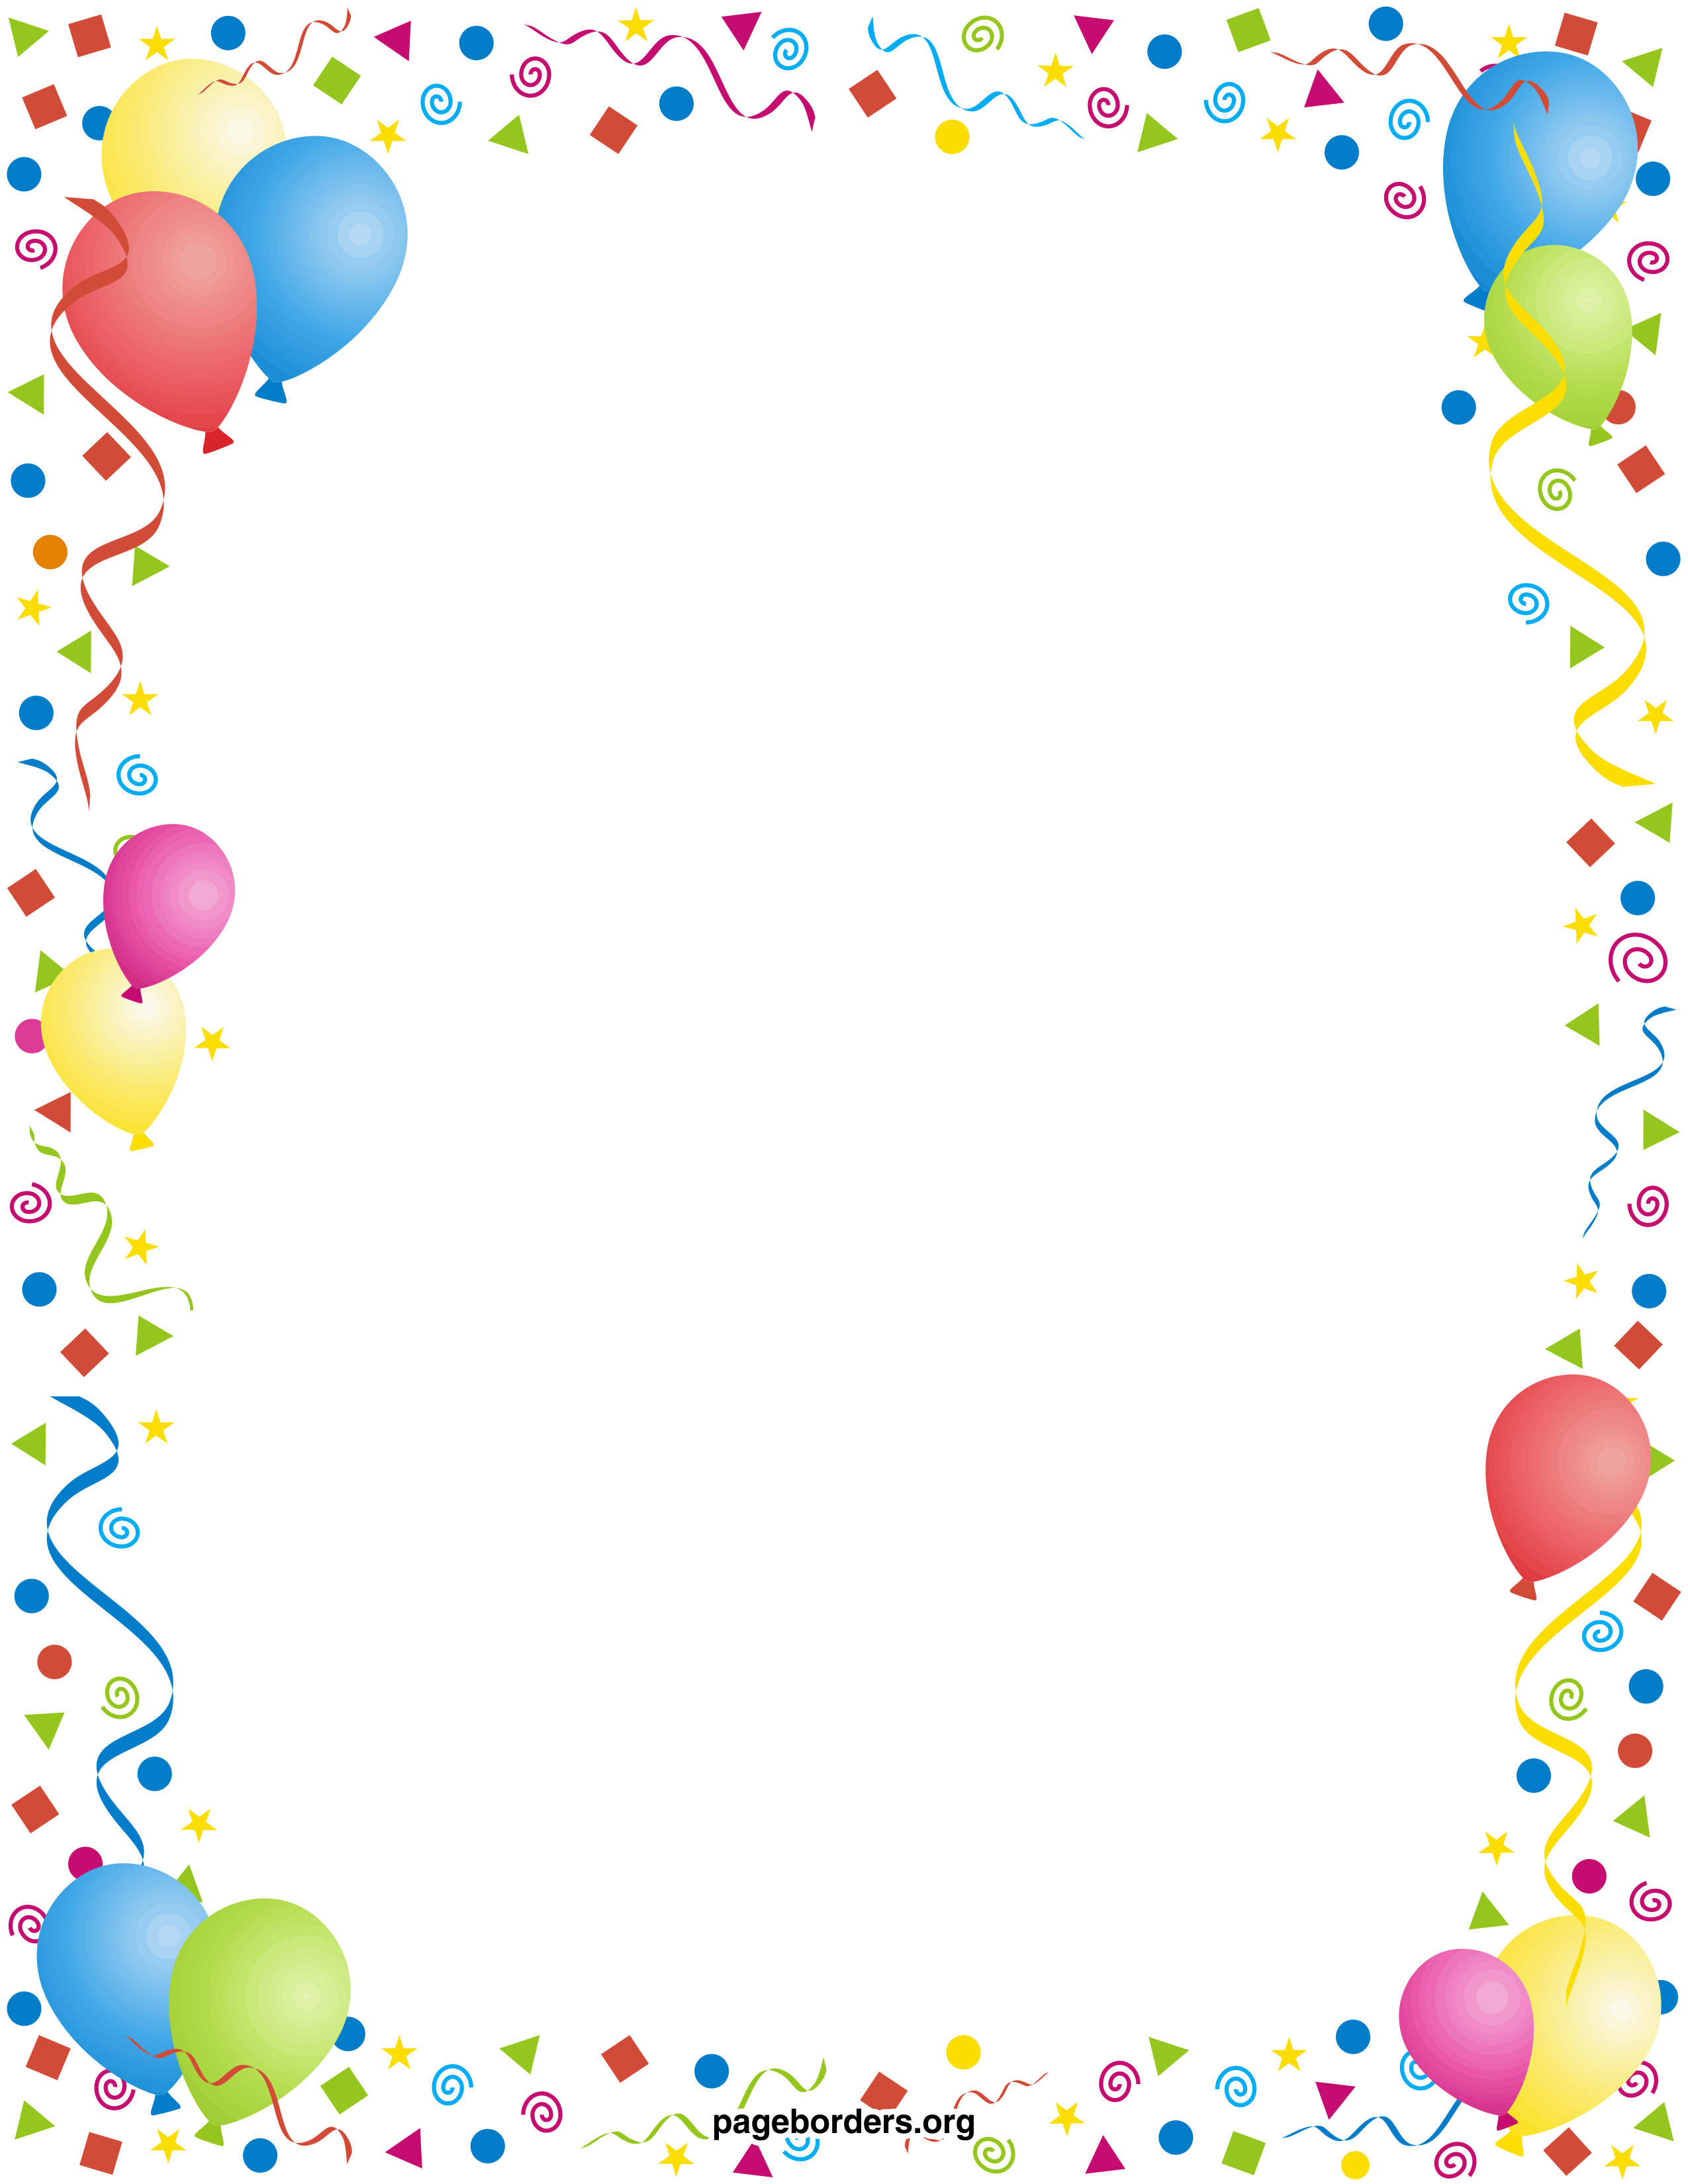 Balloon clipart classy. Borders birthday invitations best